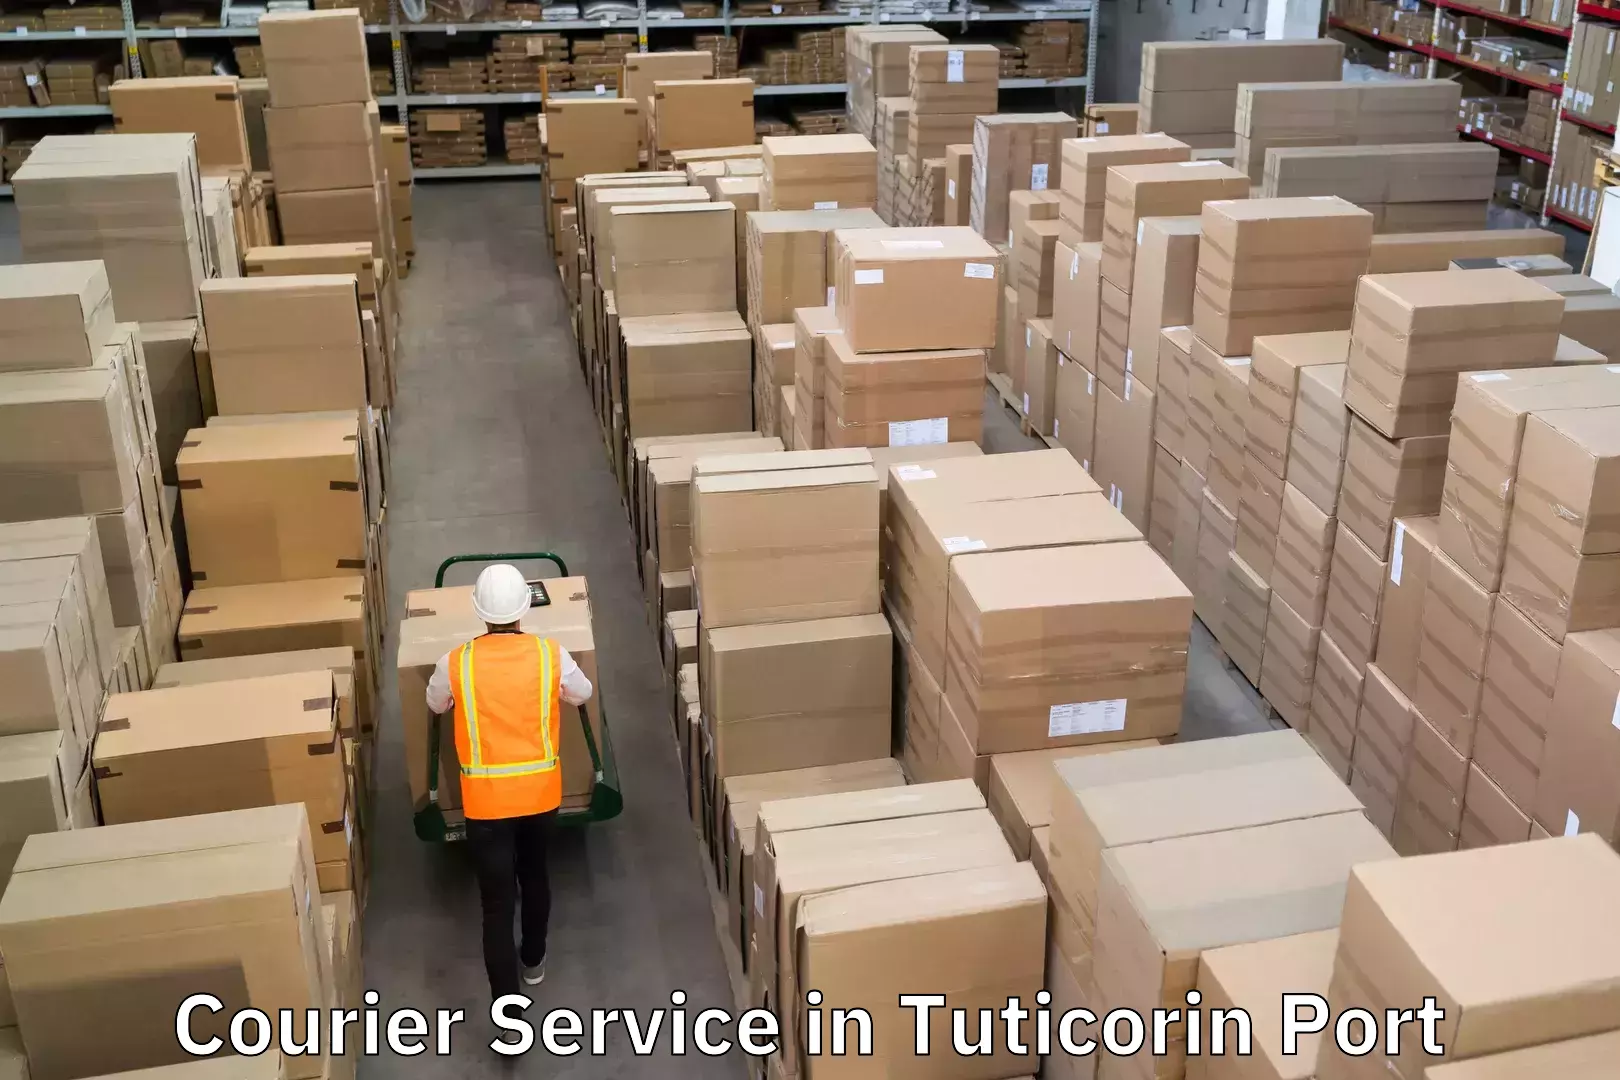 Flexible shipping options in Tuticorin Port